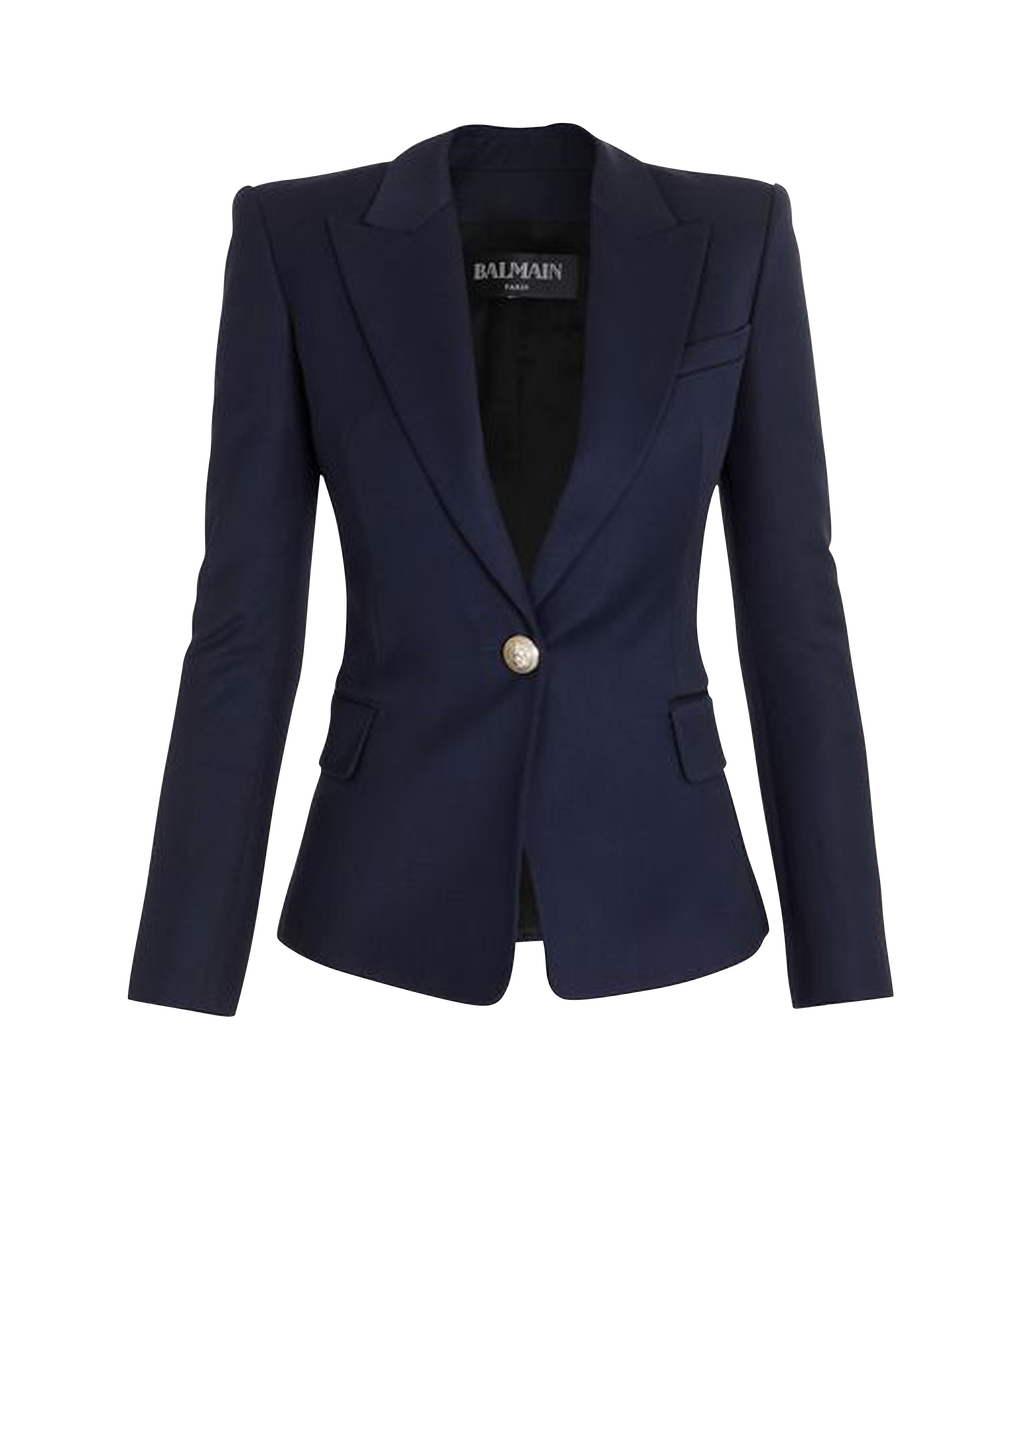 Wool single-button blazer, navy, hi-res